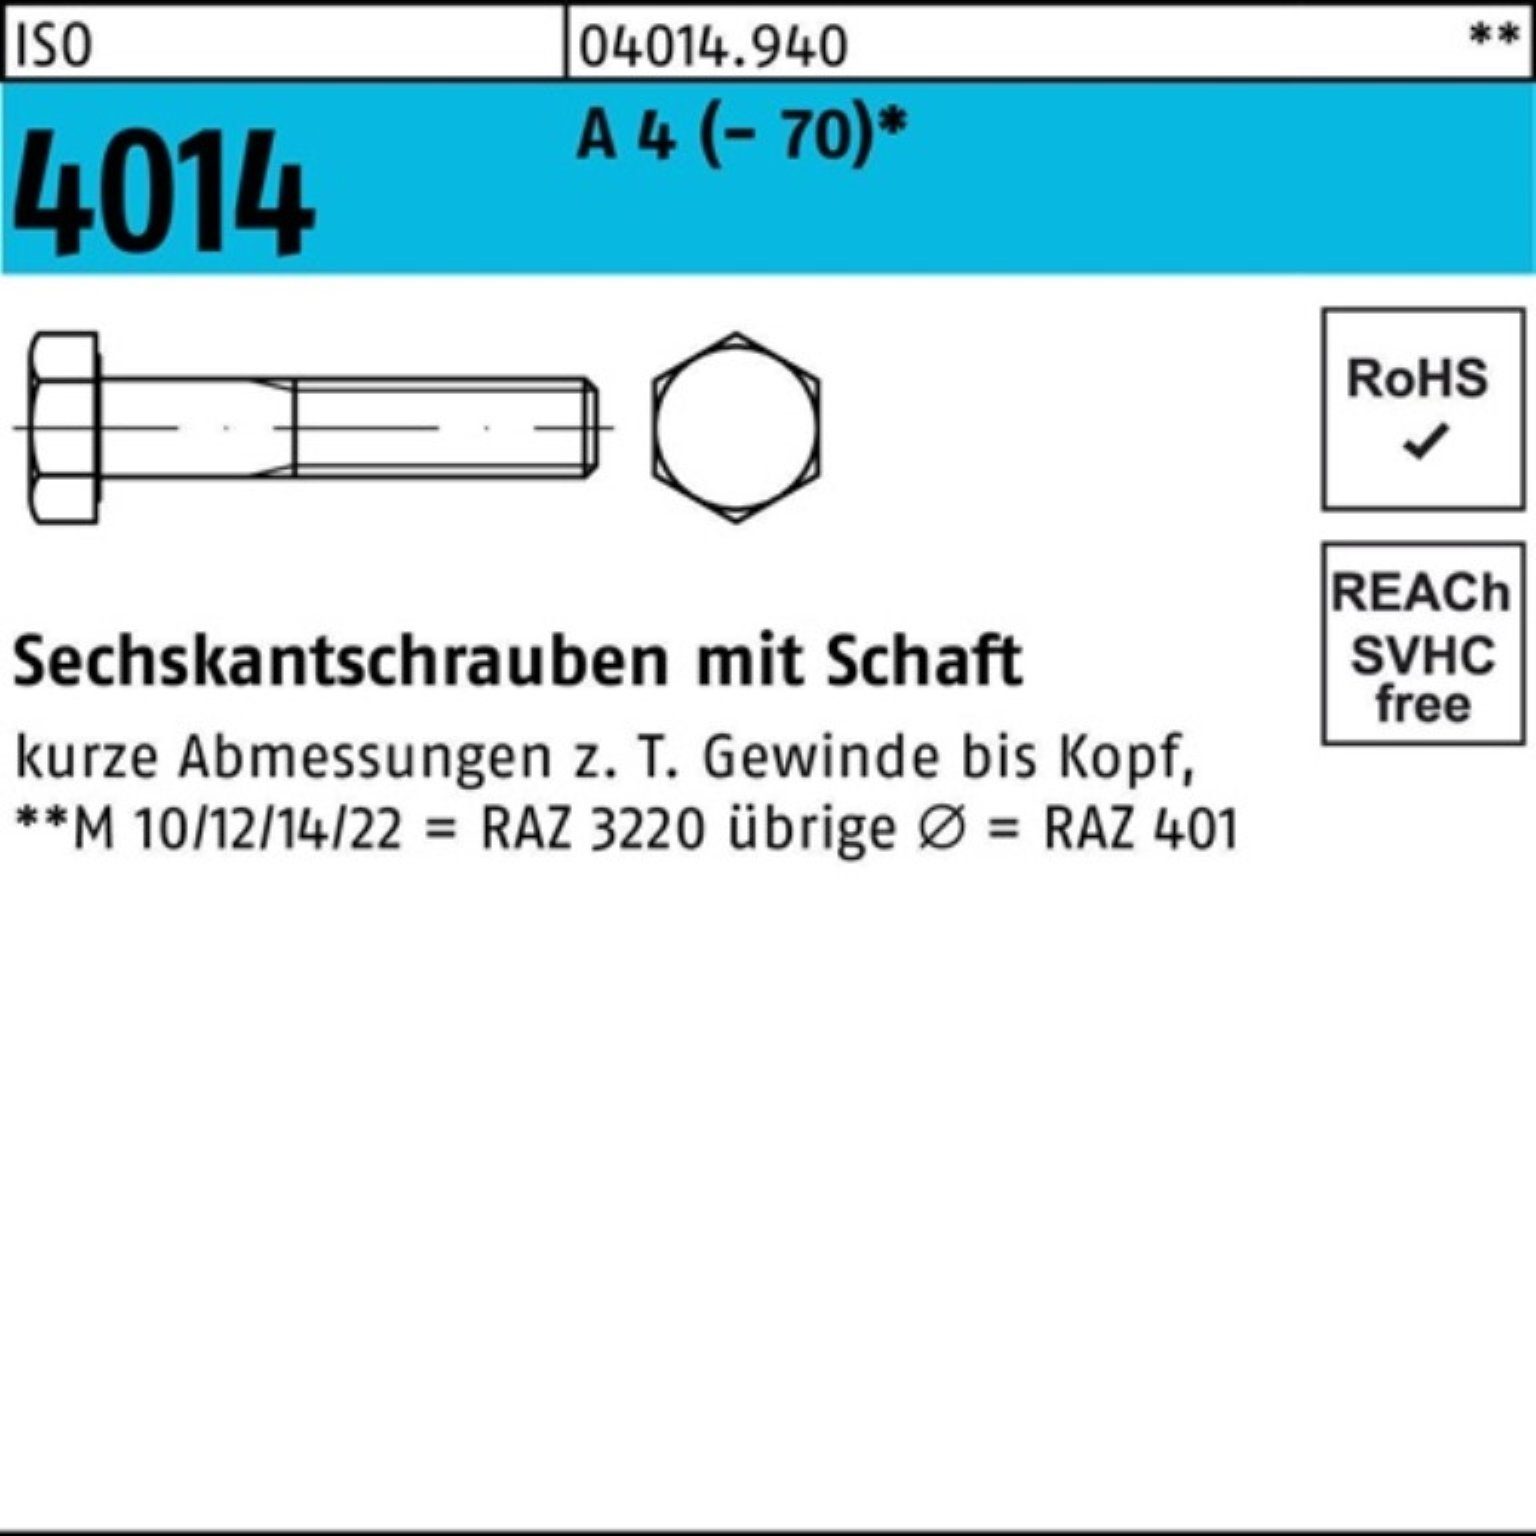 Verkauf neuer Produkte durchgeführt Bufab Sechskantschraube 100er (70) 4014 Sechskantschraube Pack Stü ISO 1 Schaft A M6x 140 4